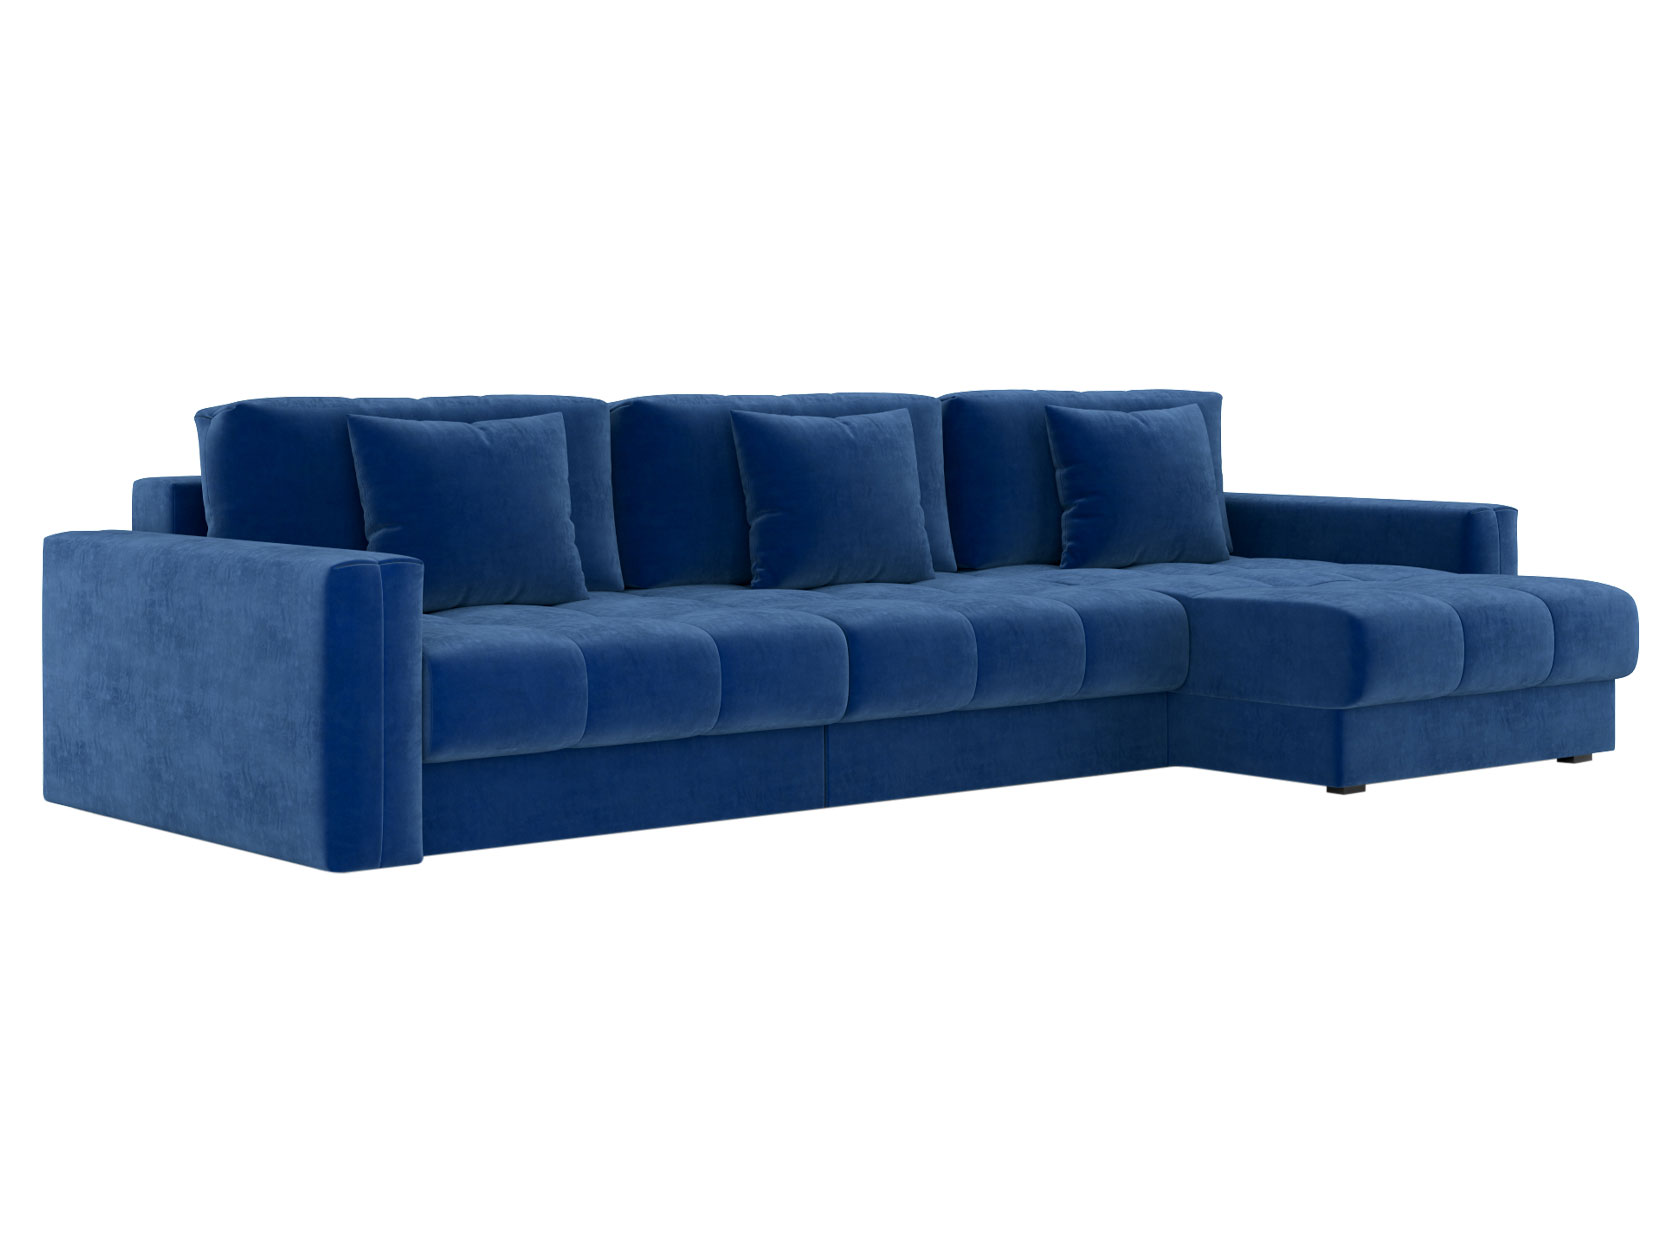 Угловой диван с оттоманкой Диван Клермон с оттоманкой Макси Клермон Макси фото 6